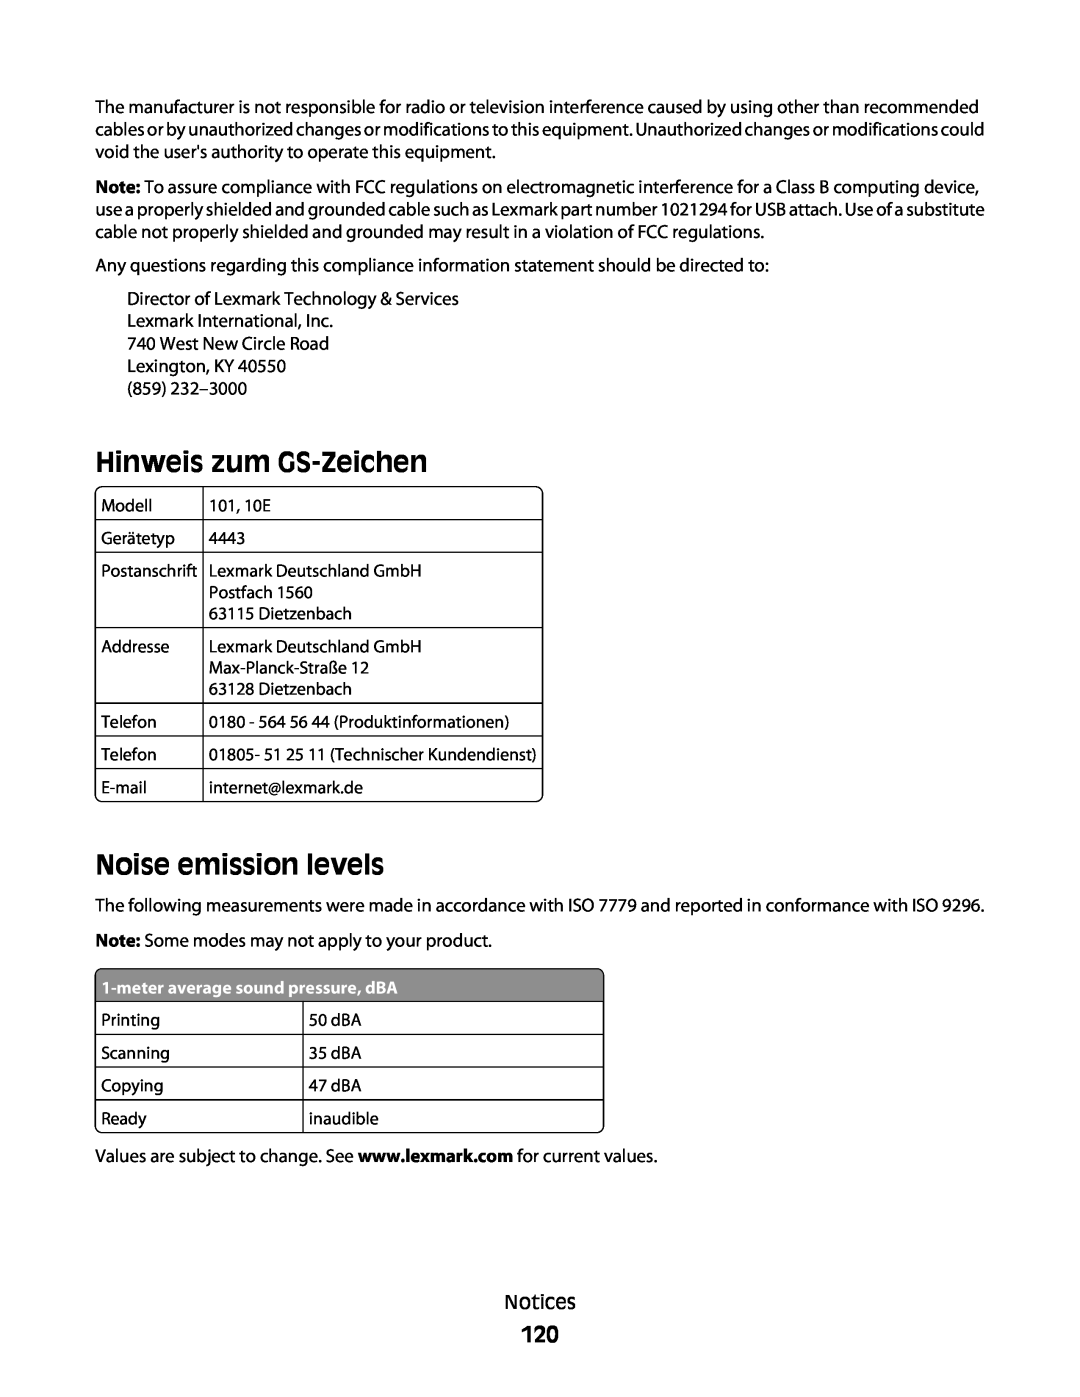 Lexmark 101, 10E manual Hinweis zum GS-Zeichen, Noise emission levels 